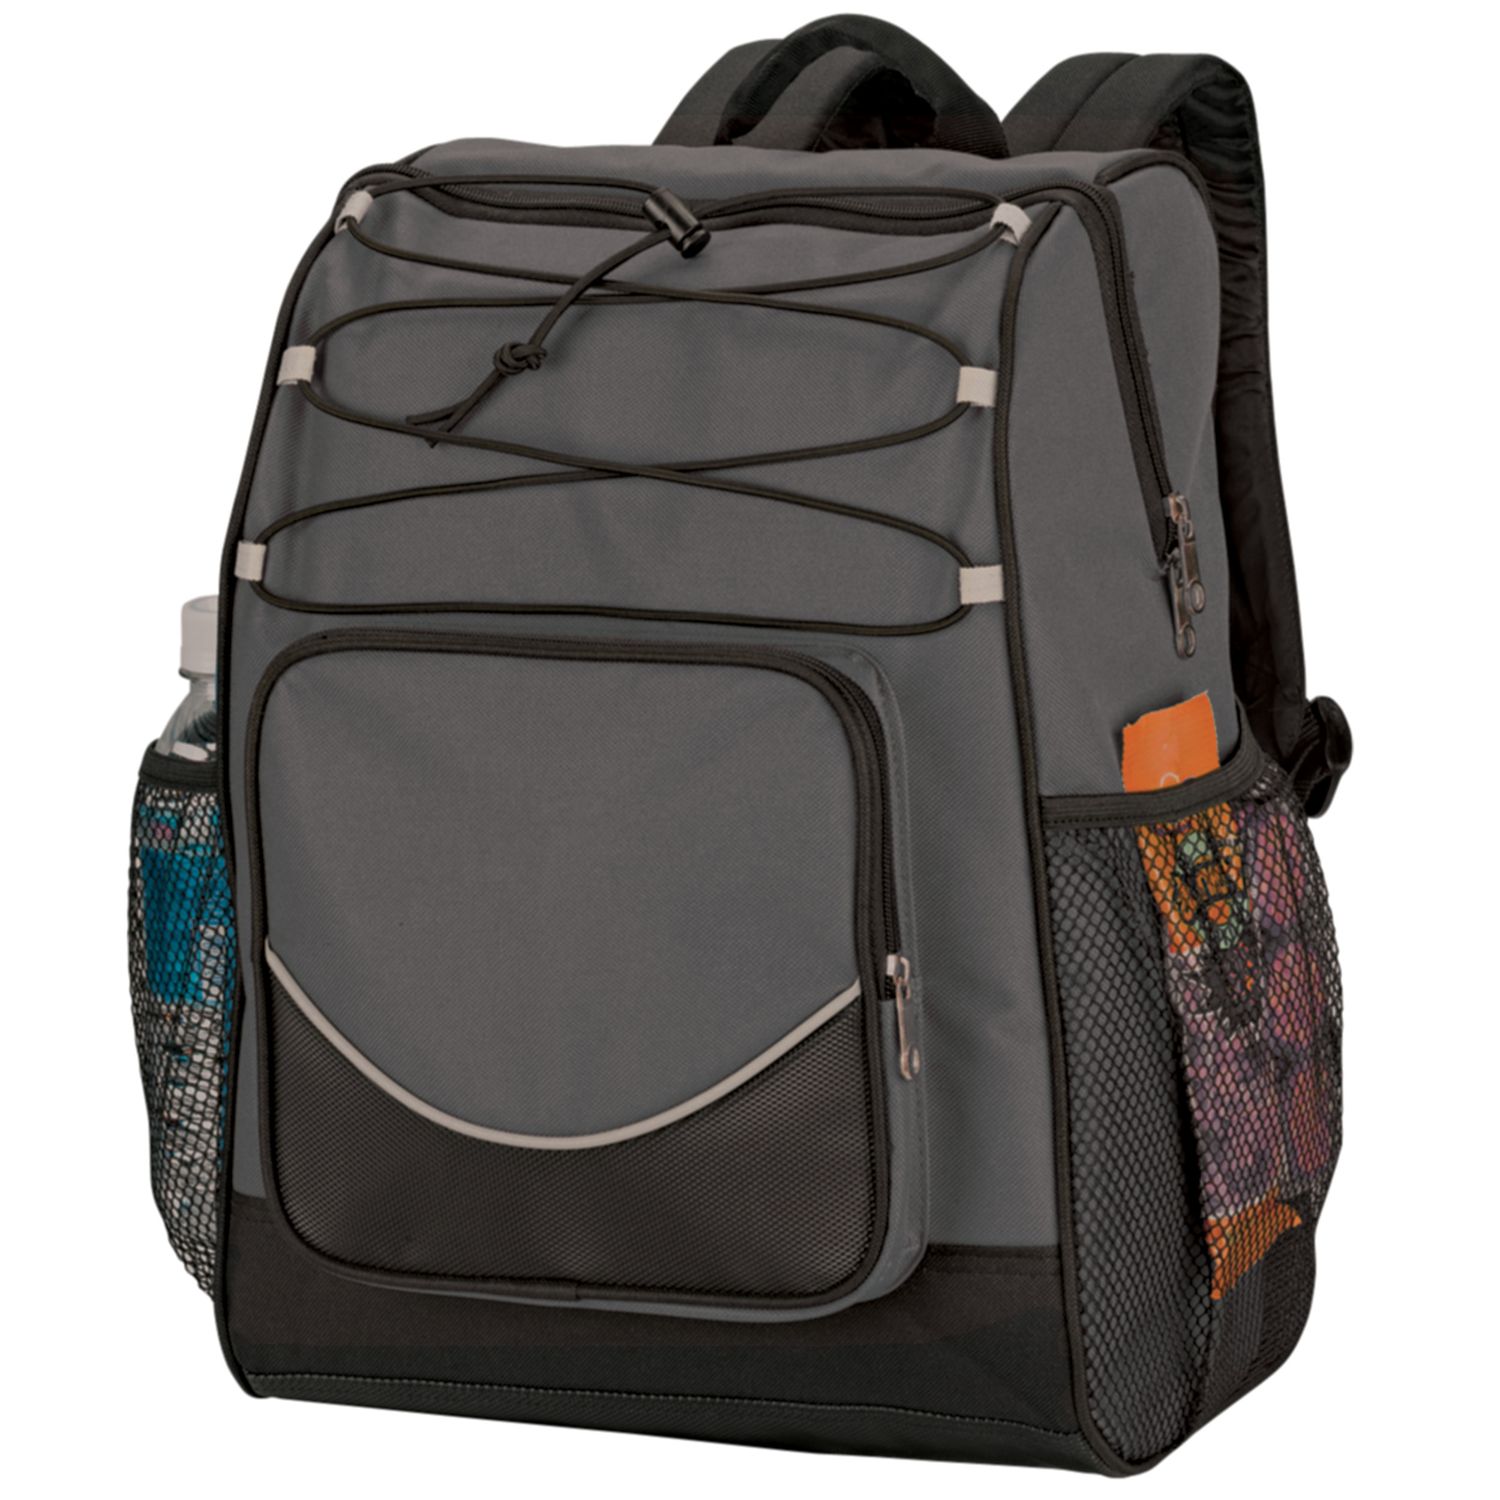 Backpack Cooler with Black Trim